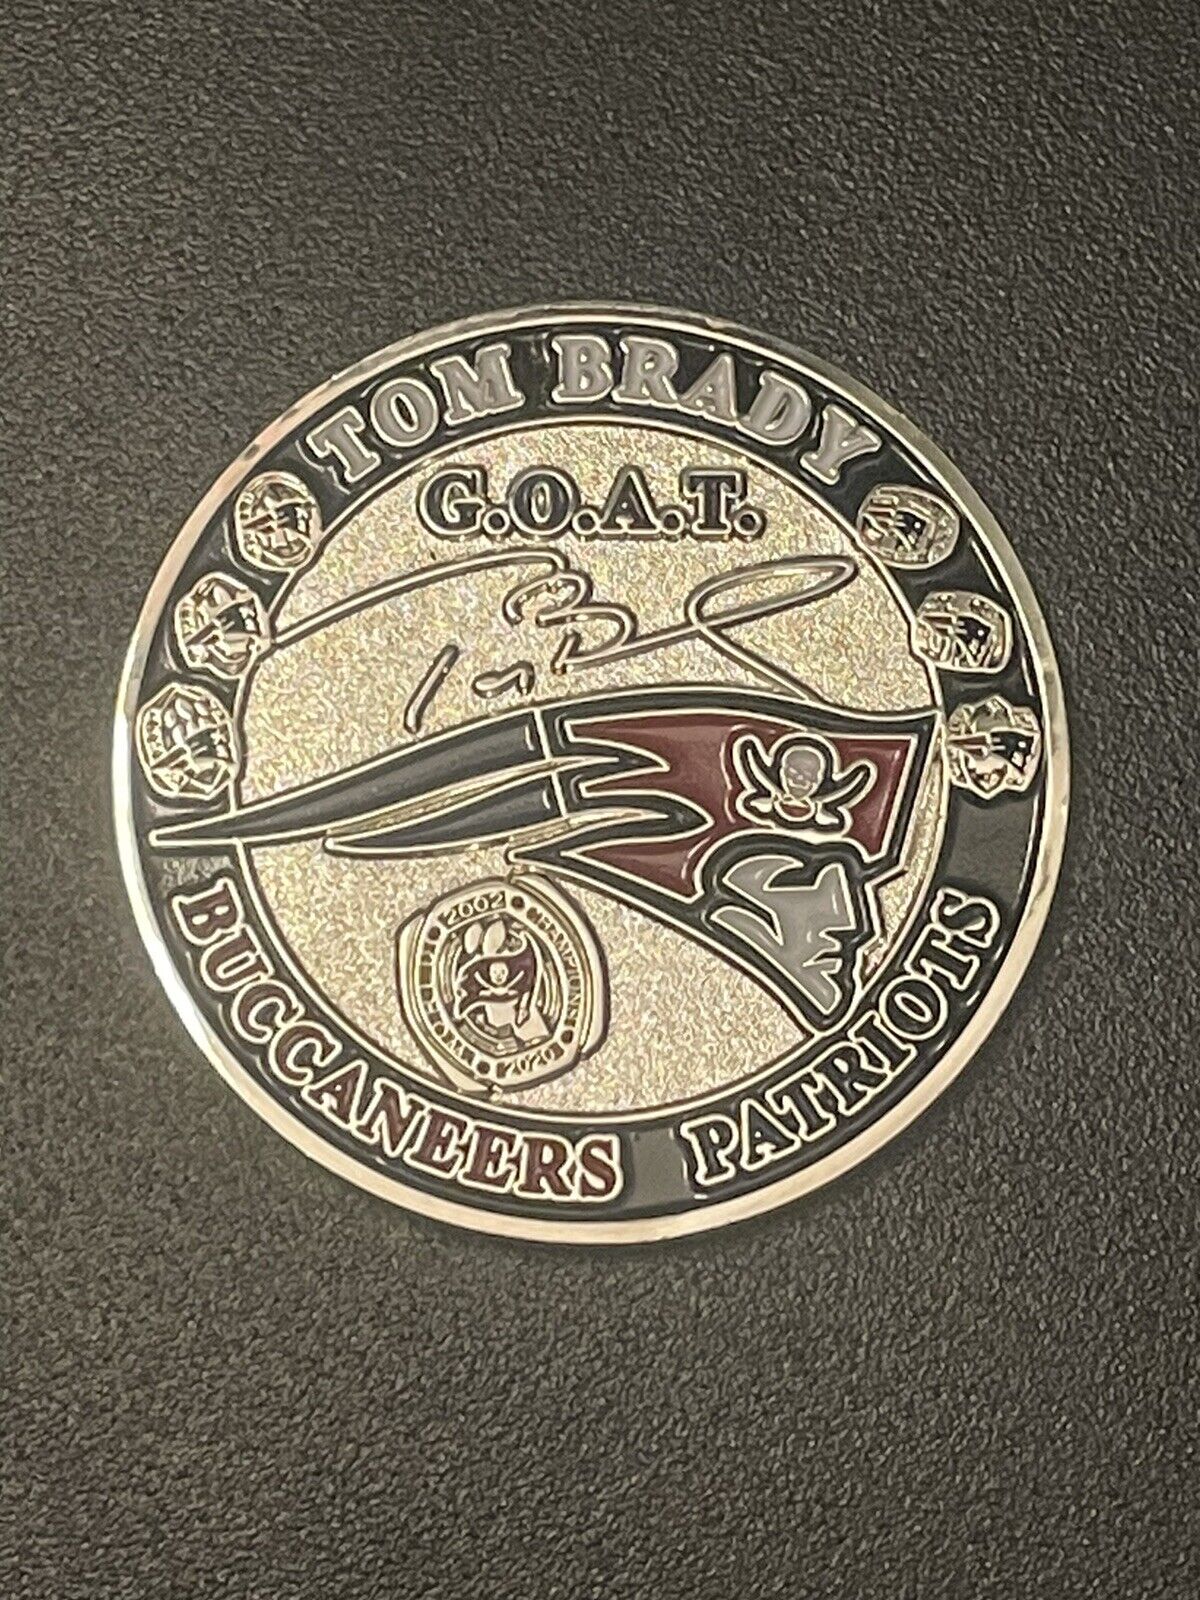 Tom Brady GOAT Challenge Coin Buccaneers/Patriots Super Bowl Champ/ MVP